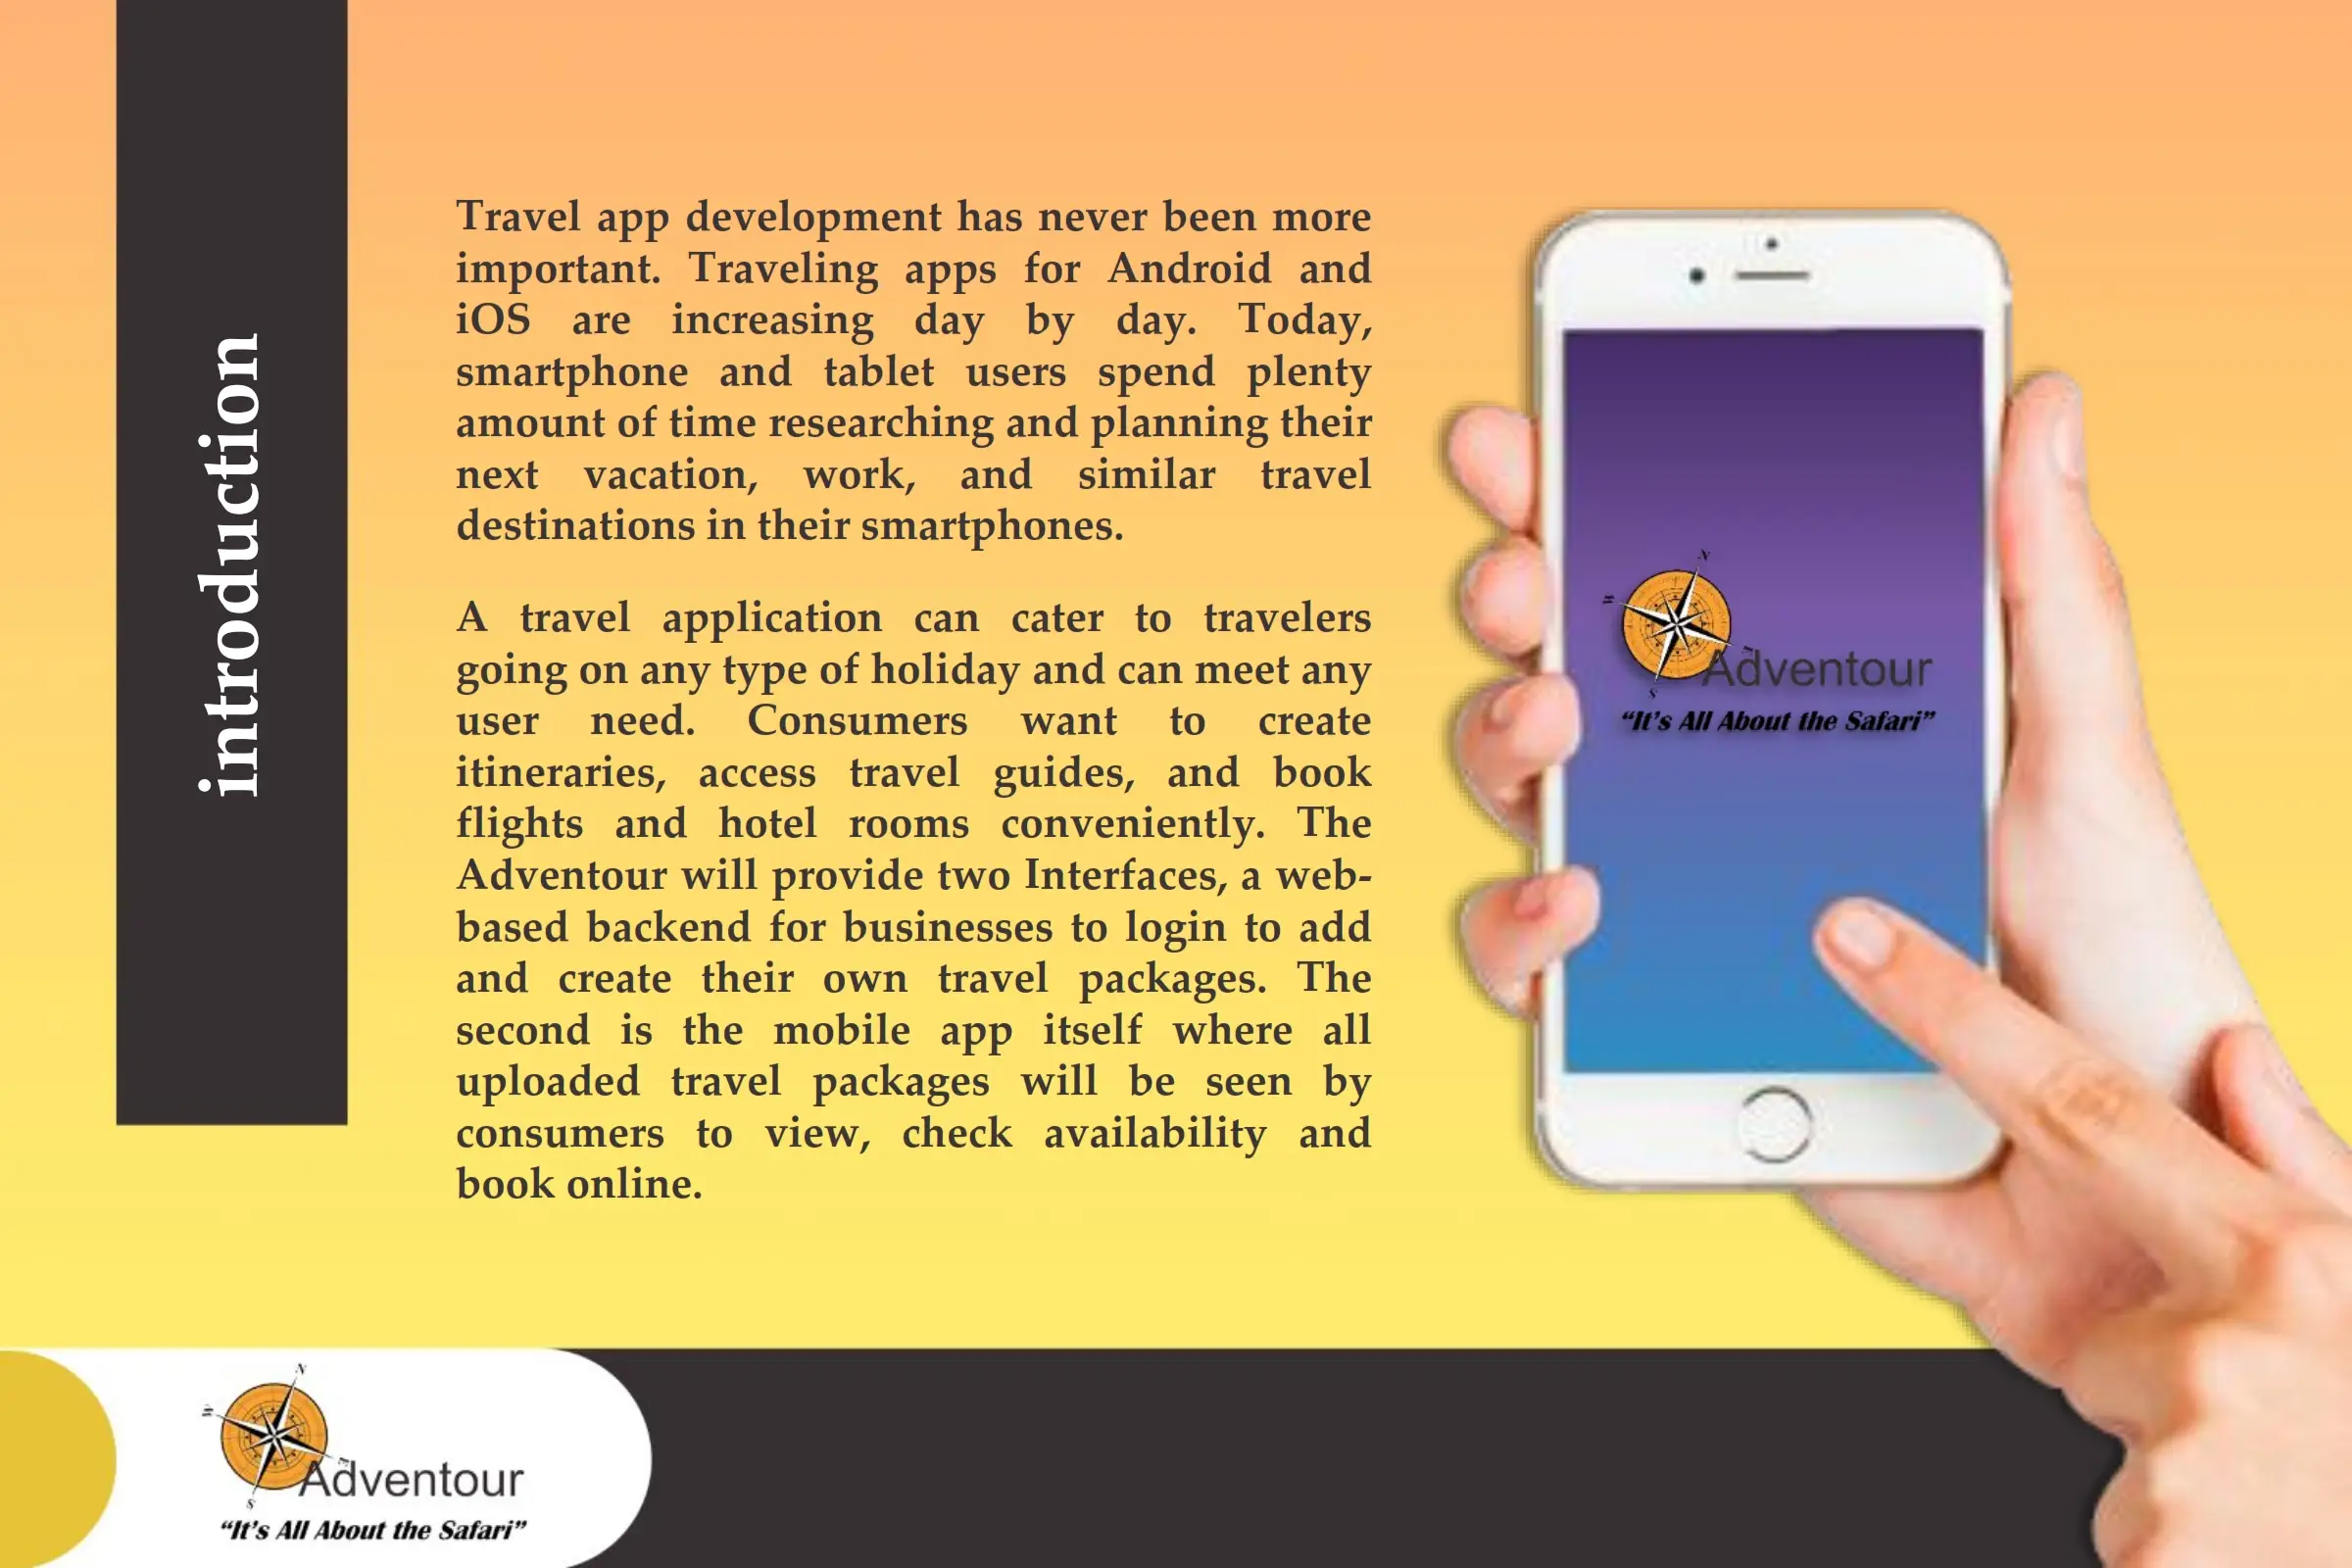 adventour-travel-app-3x2-copy_.jpg